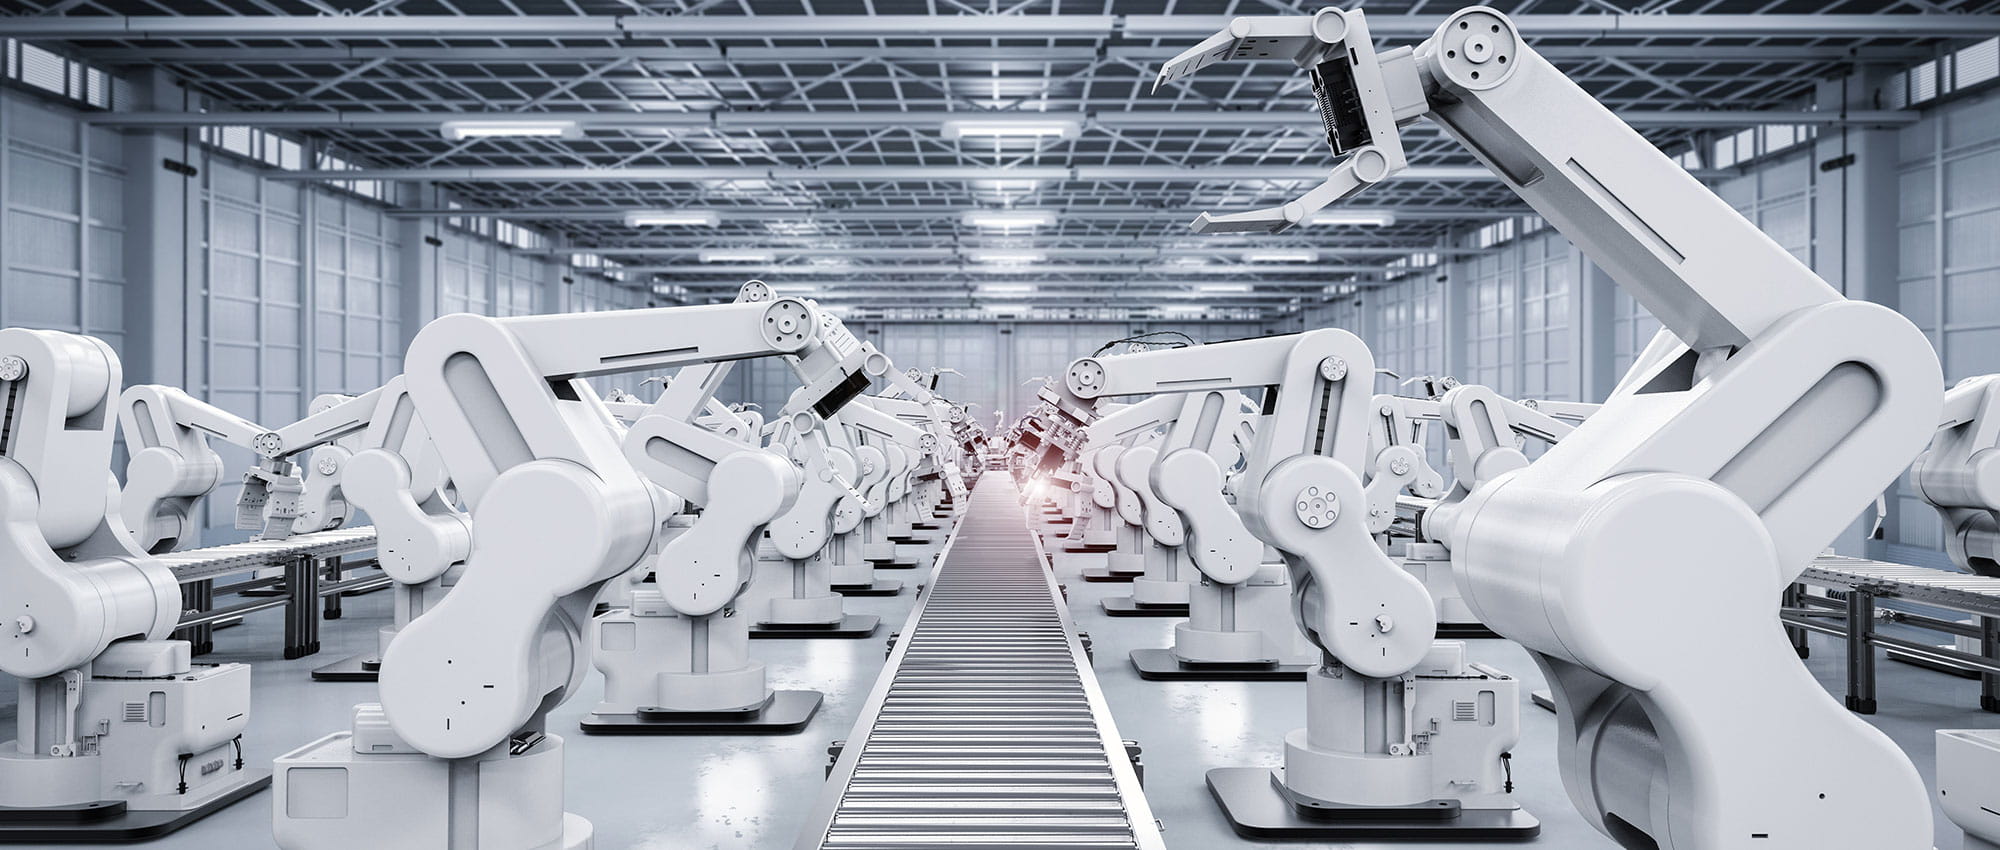 Many white robots along a production line